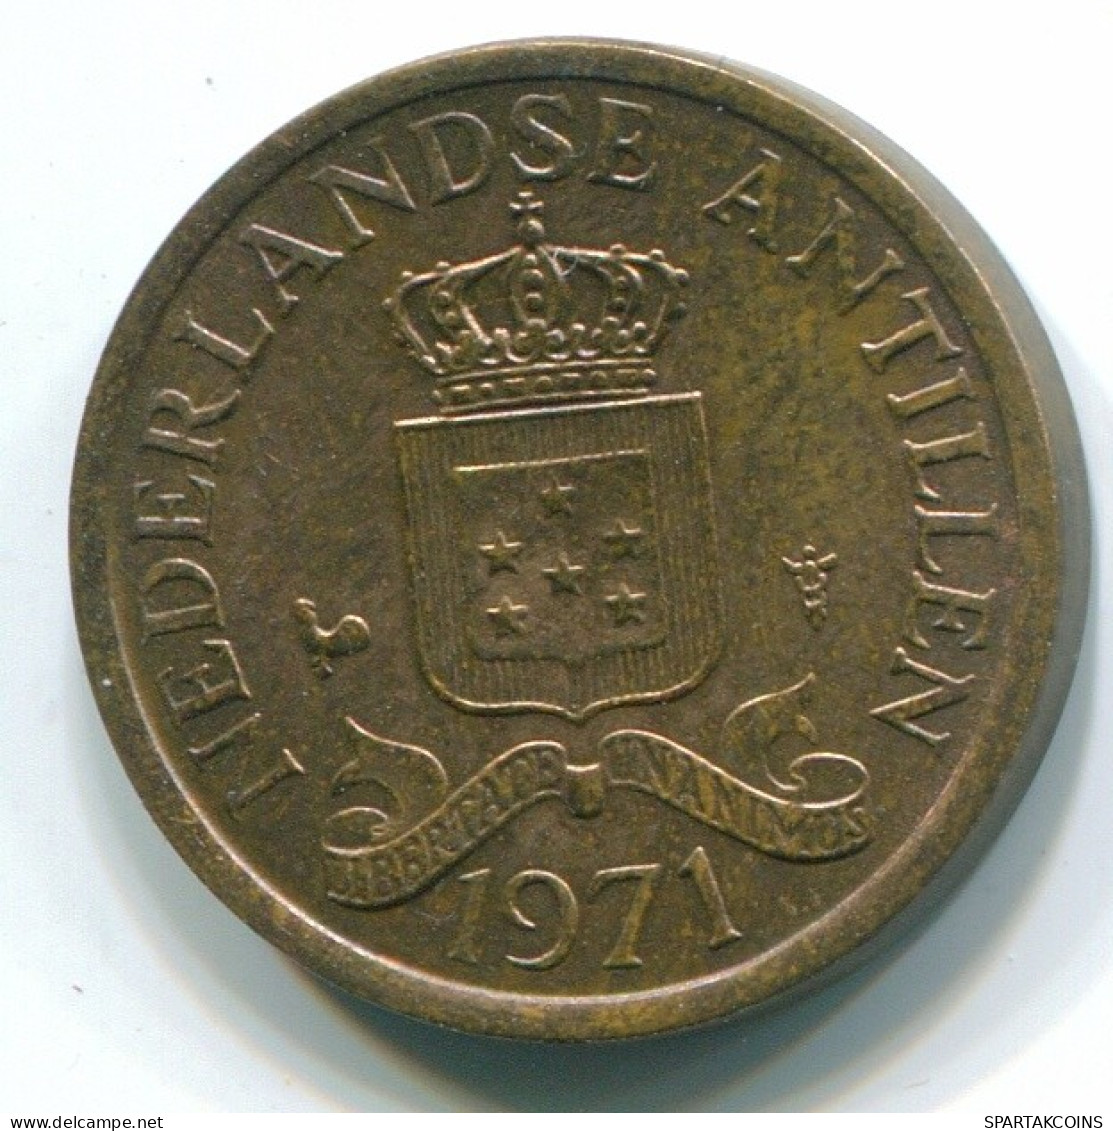 1 CENT 1971 NETHERLANDS ANTILLES Bronze Colonial Coin #S10627.U.A - Antille Olandesi